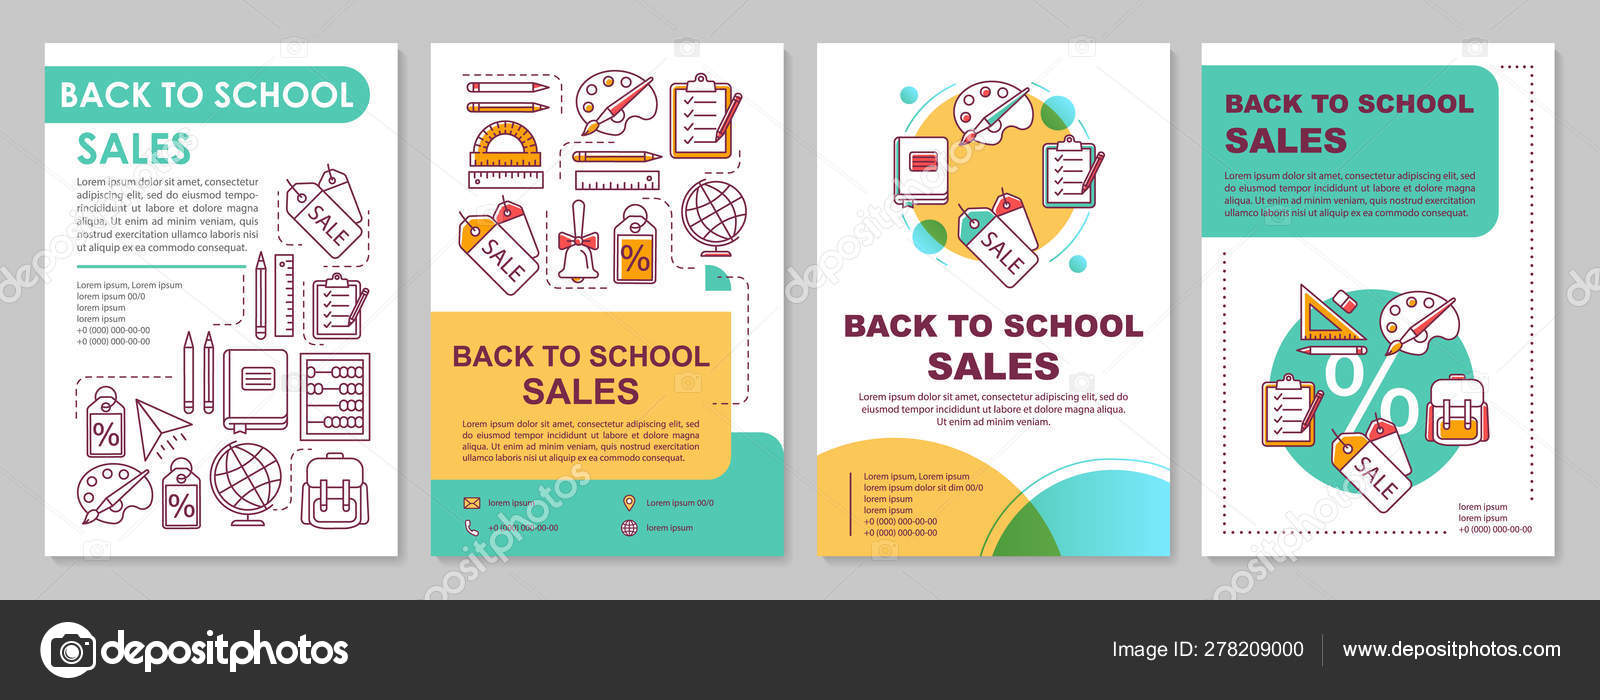 https://st4.depositphotos.com/4177785/27820/v/1600/depositphotos_278209000-stock-illustration-school-supplies-discounts-brochure-template.jpg